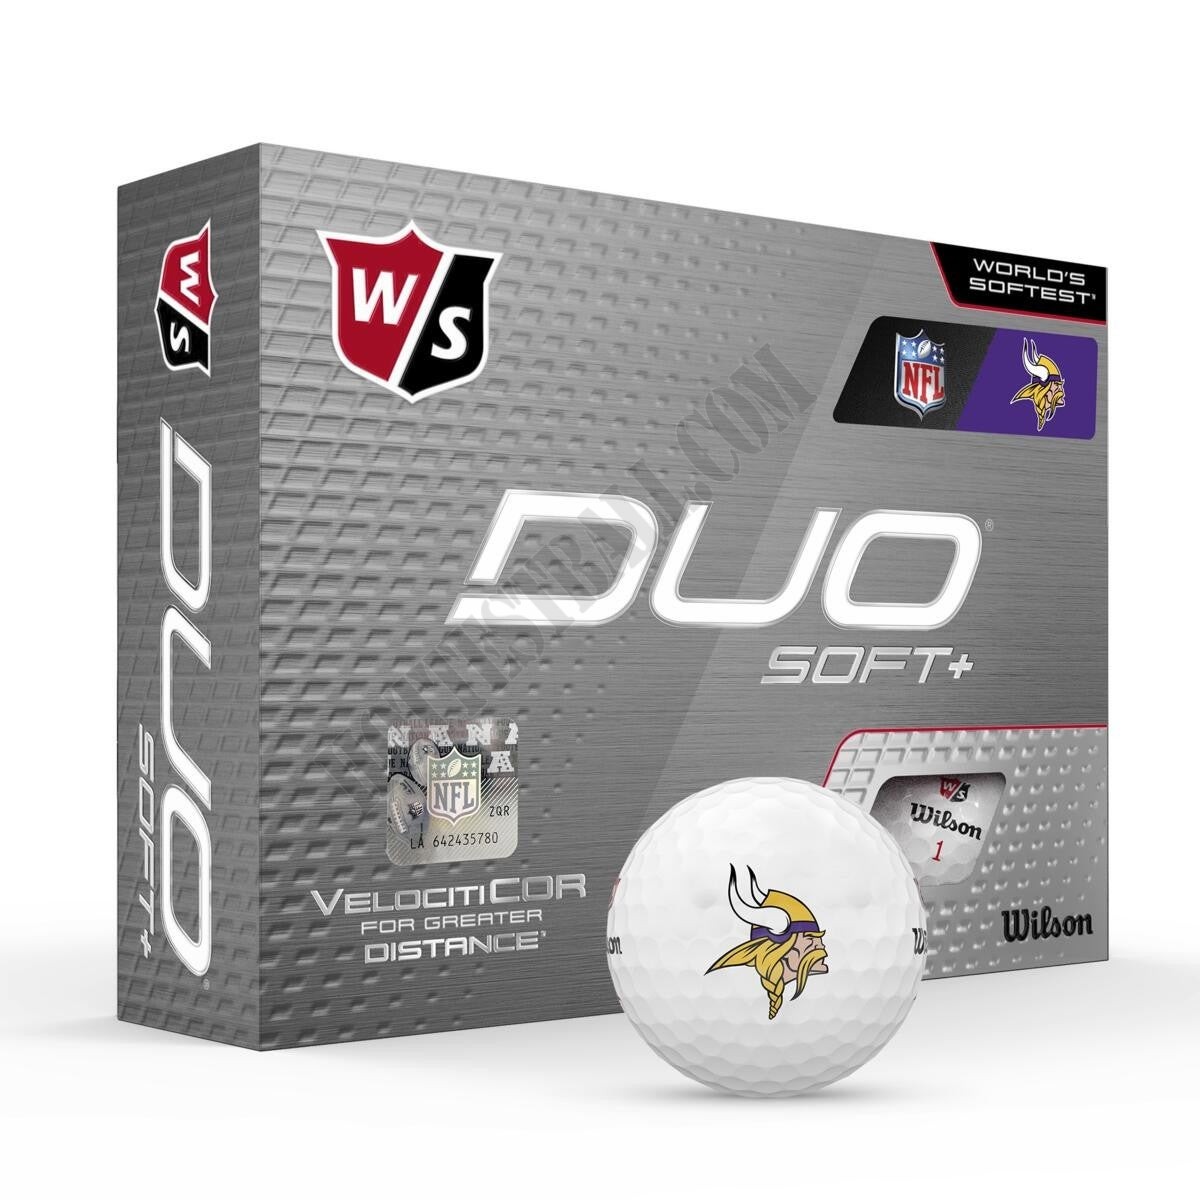 Duo Soft+ NFL Golf Balls - Minnesota Vikings ● Wilson Promotions - Duo Soft+ NFL Golf Balls - Minnesota Vikings ● Wilson Promotions